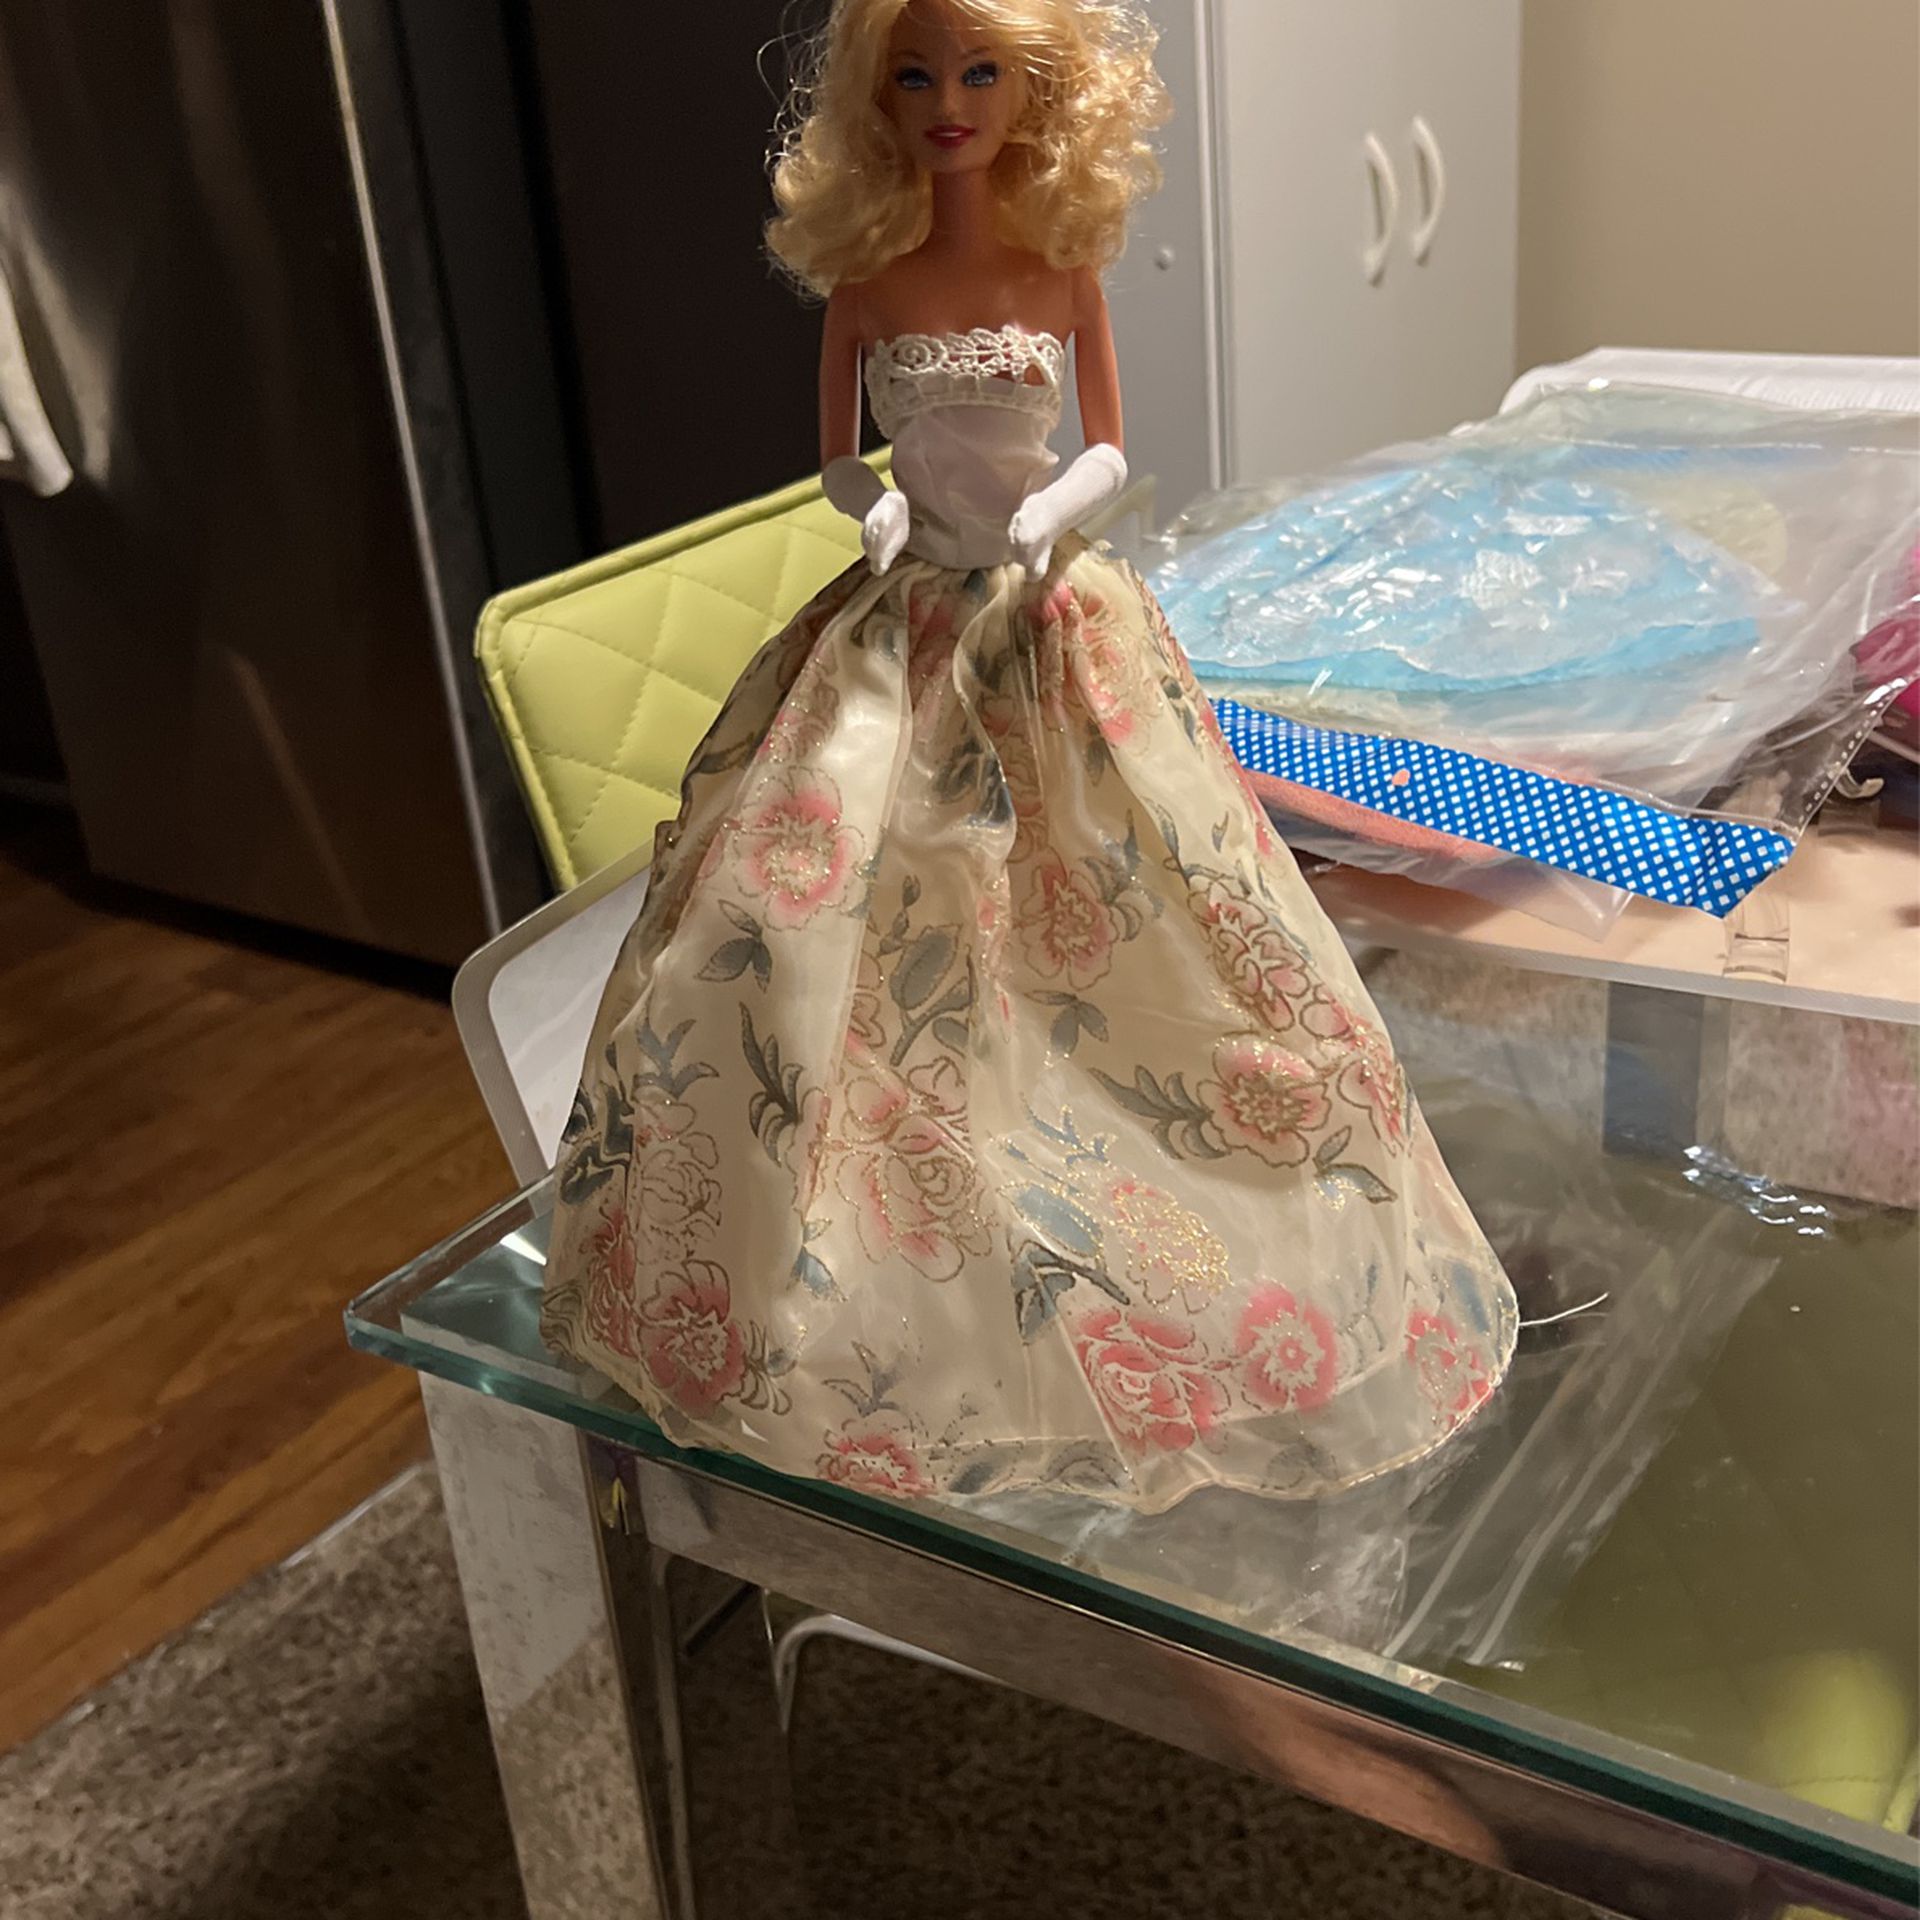 Barbie Doll Clothing 